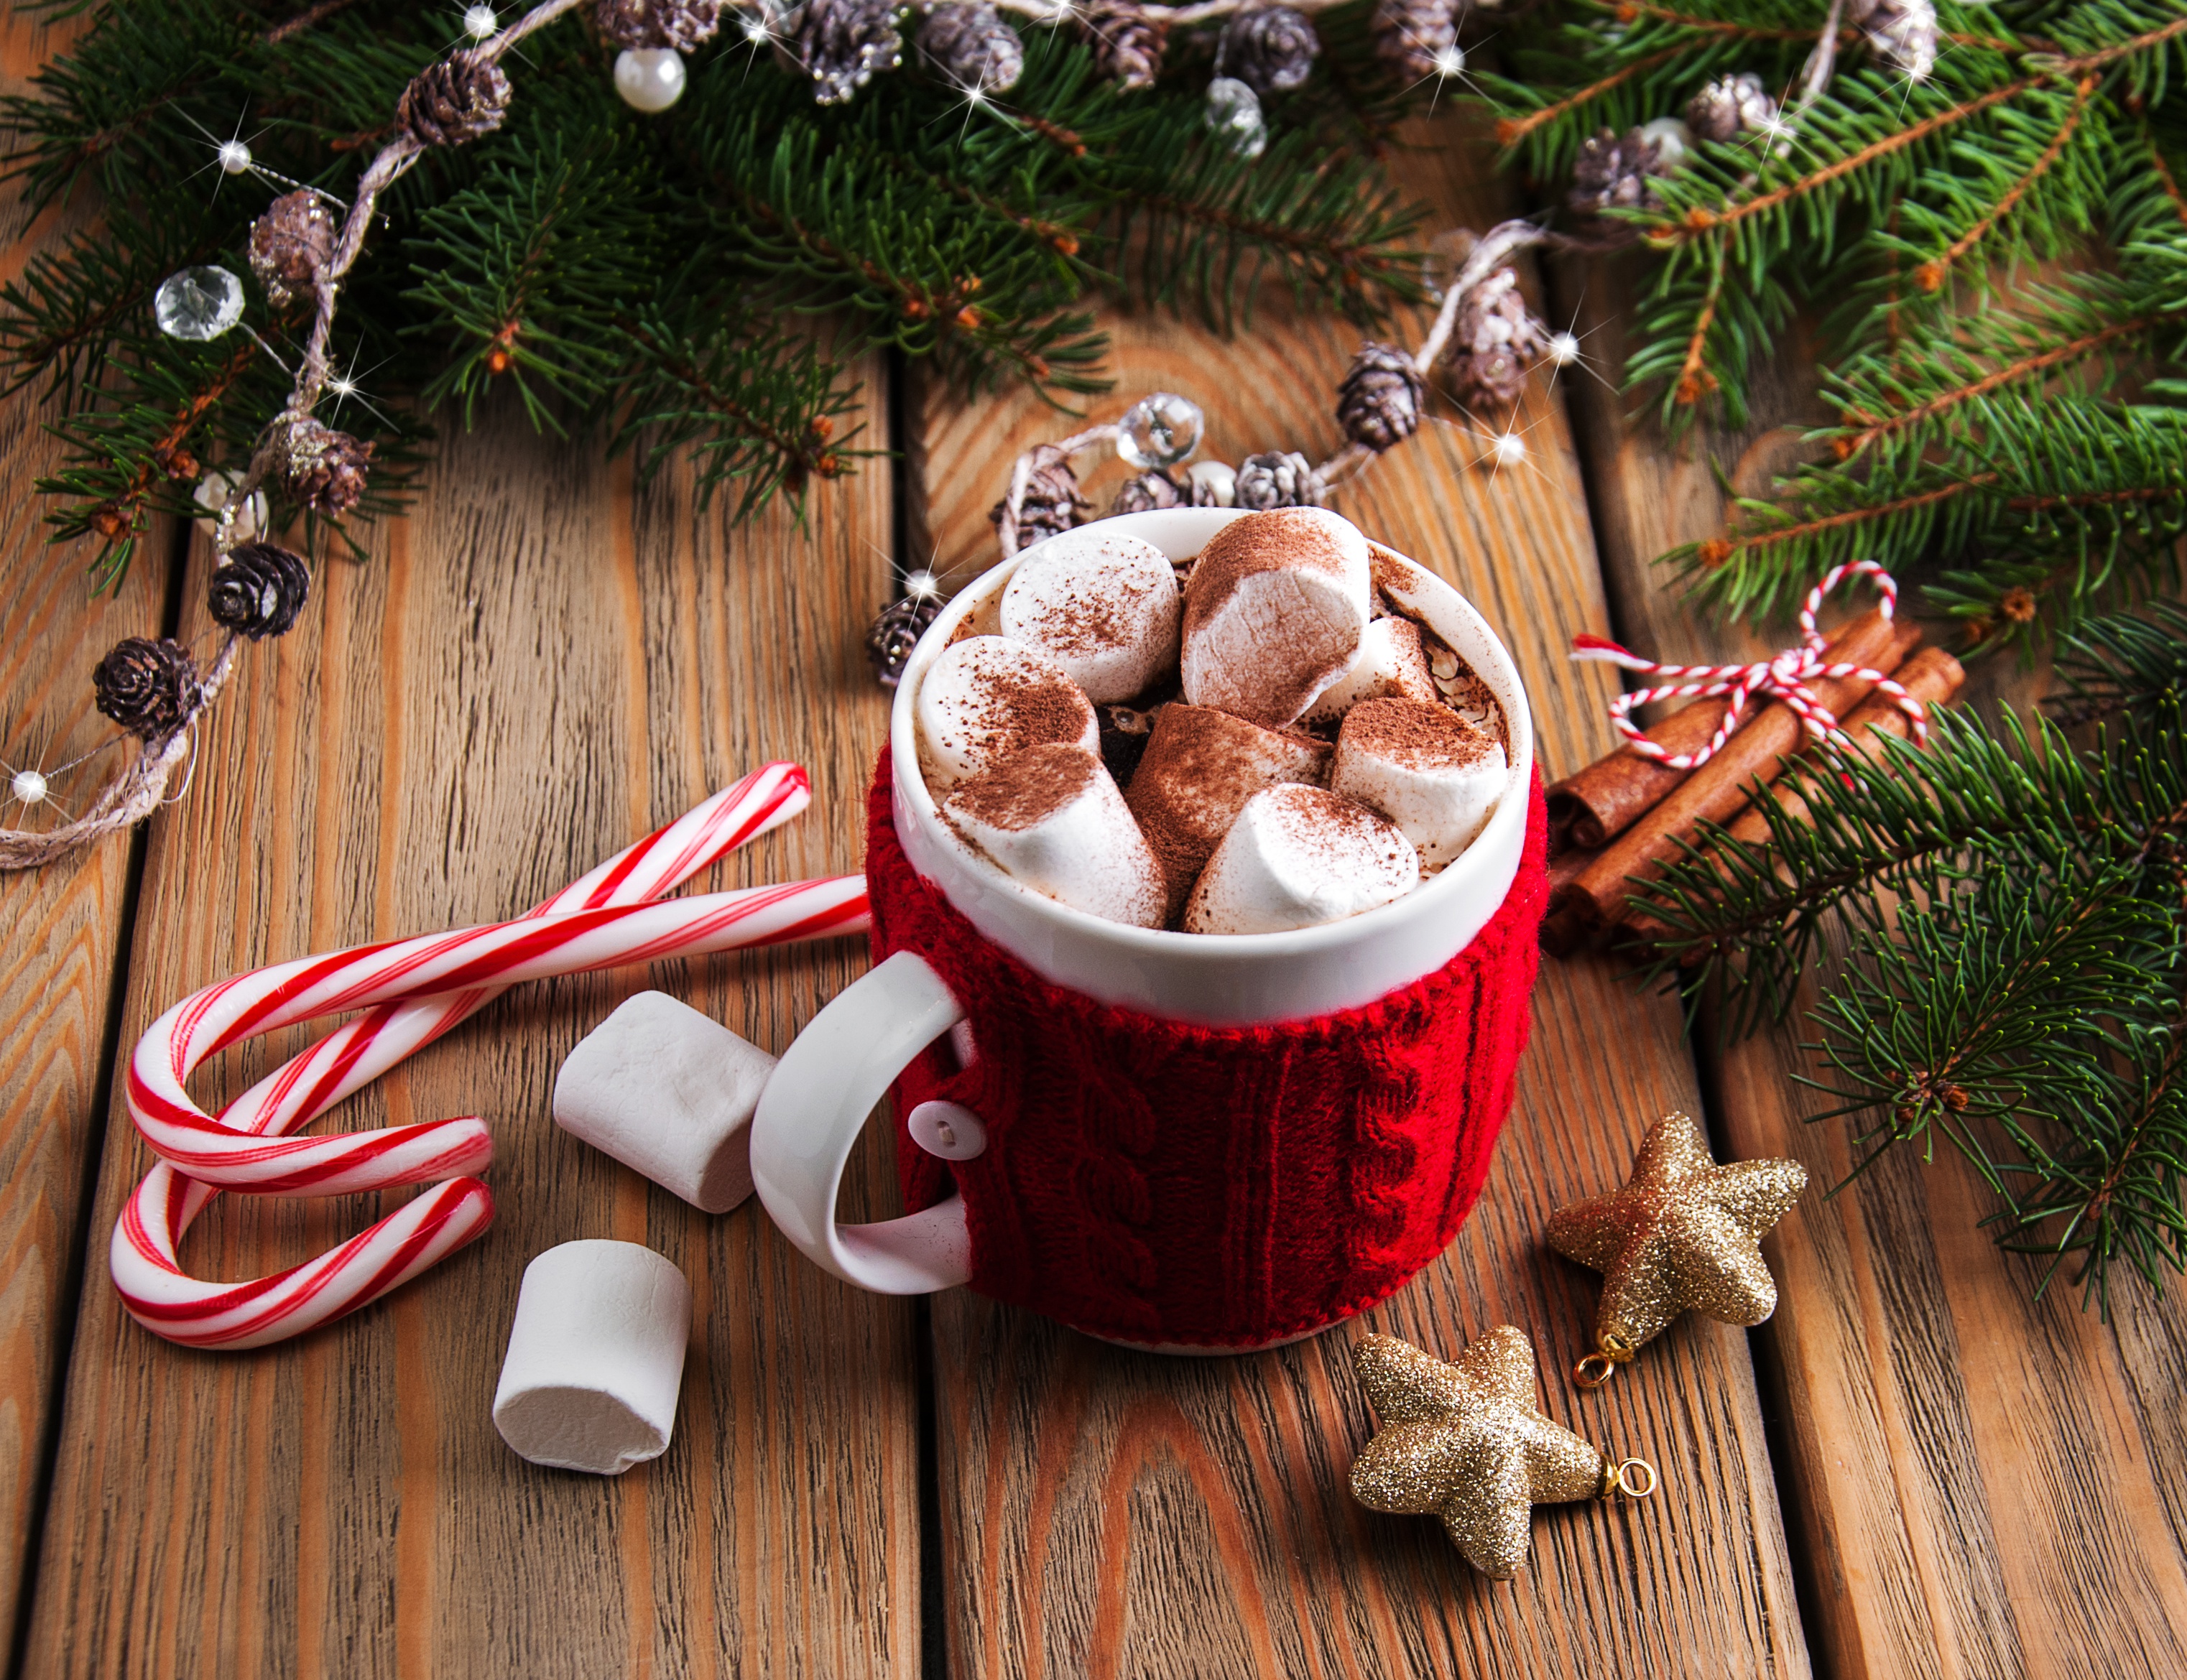 3044X2339 Christmas Hot Cocoa Wallpapers - Top Free Christmas Hot Cocoa Bac...